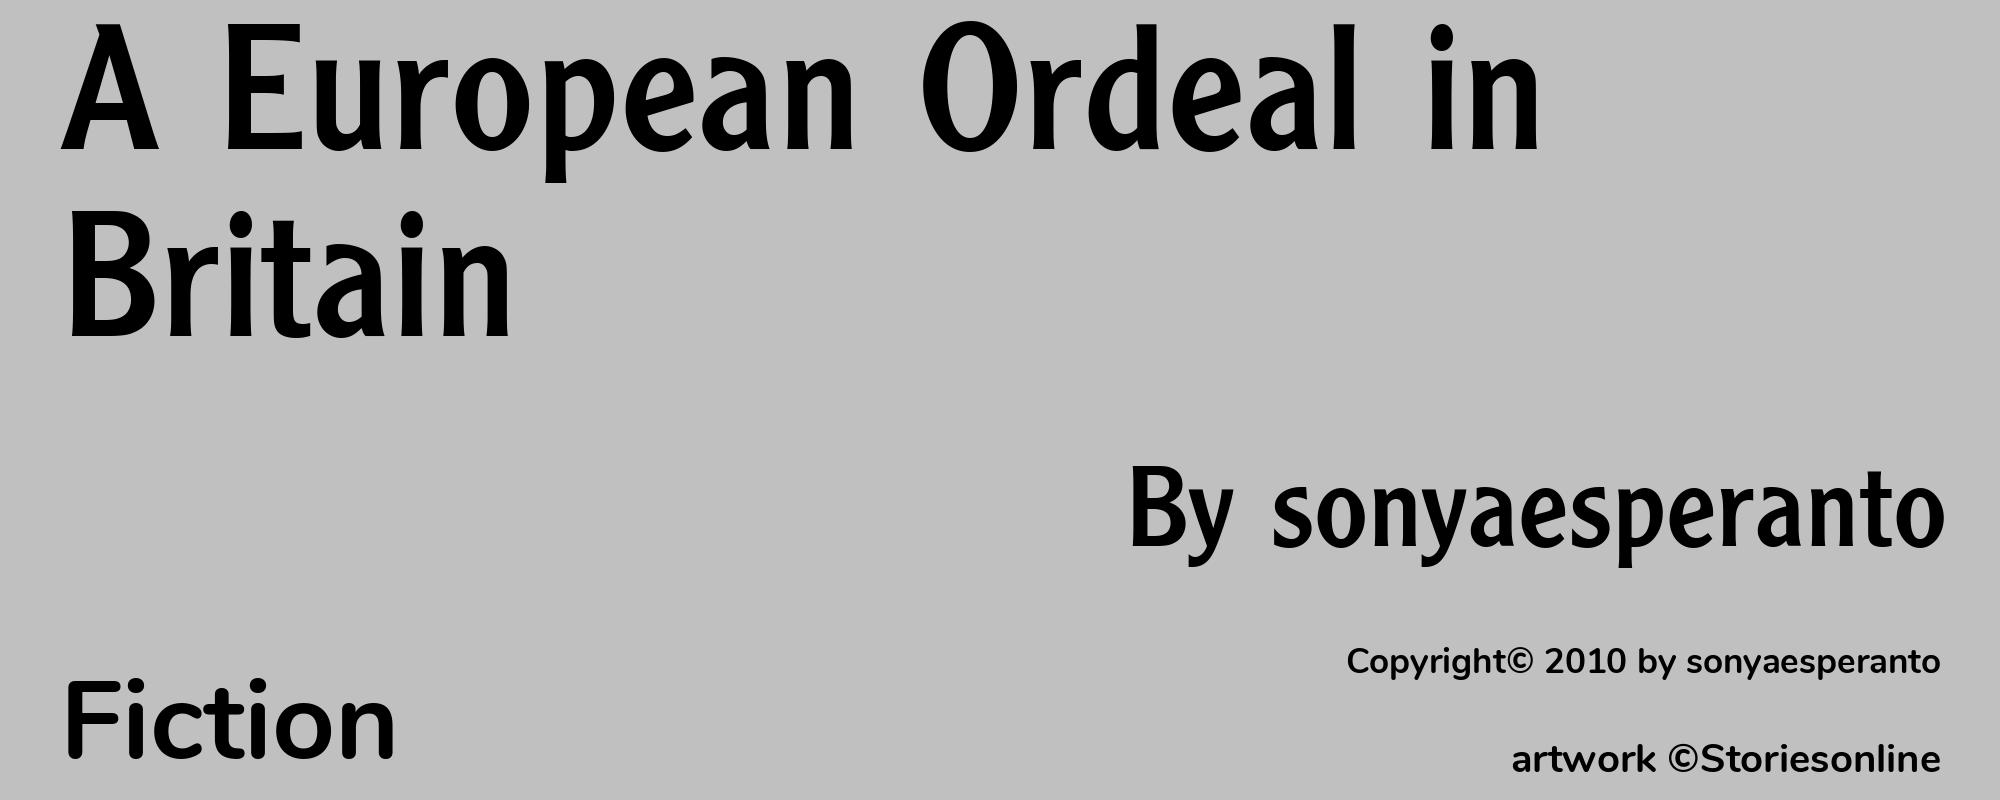 A European Ordeal in Britain - Cover